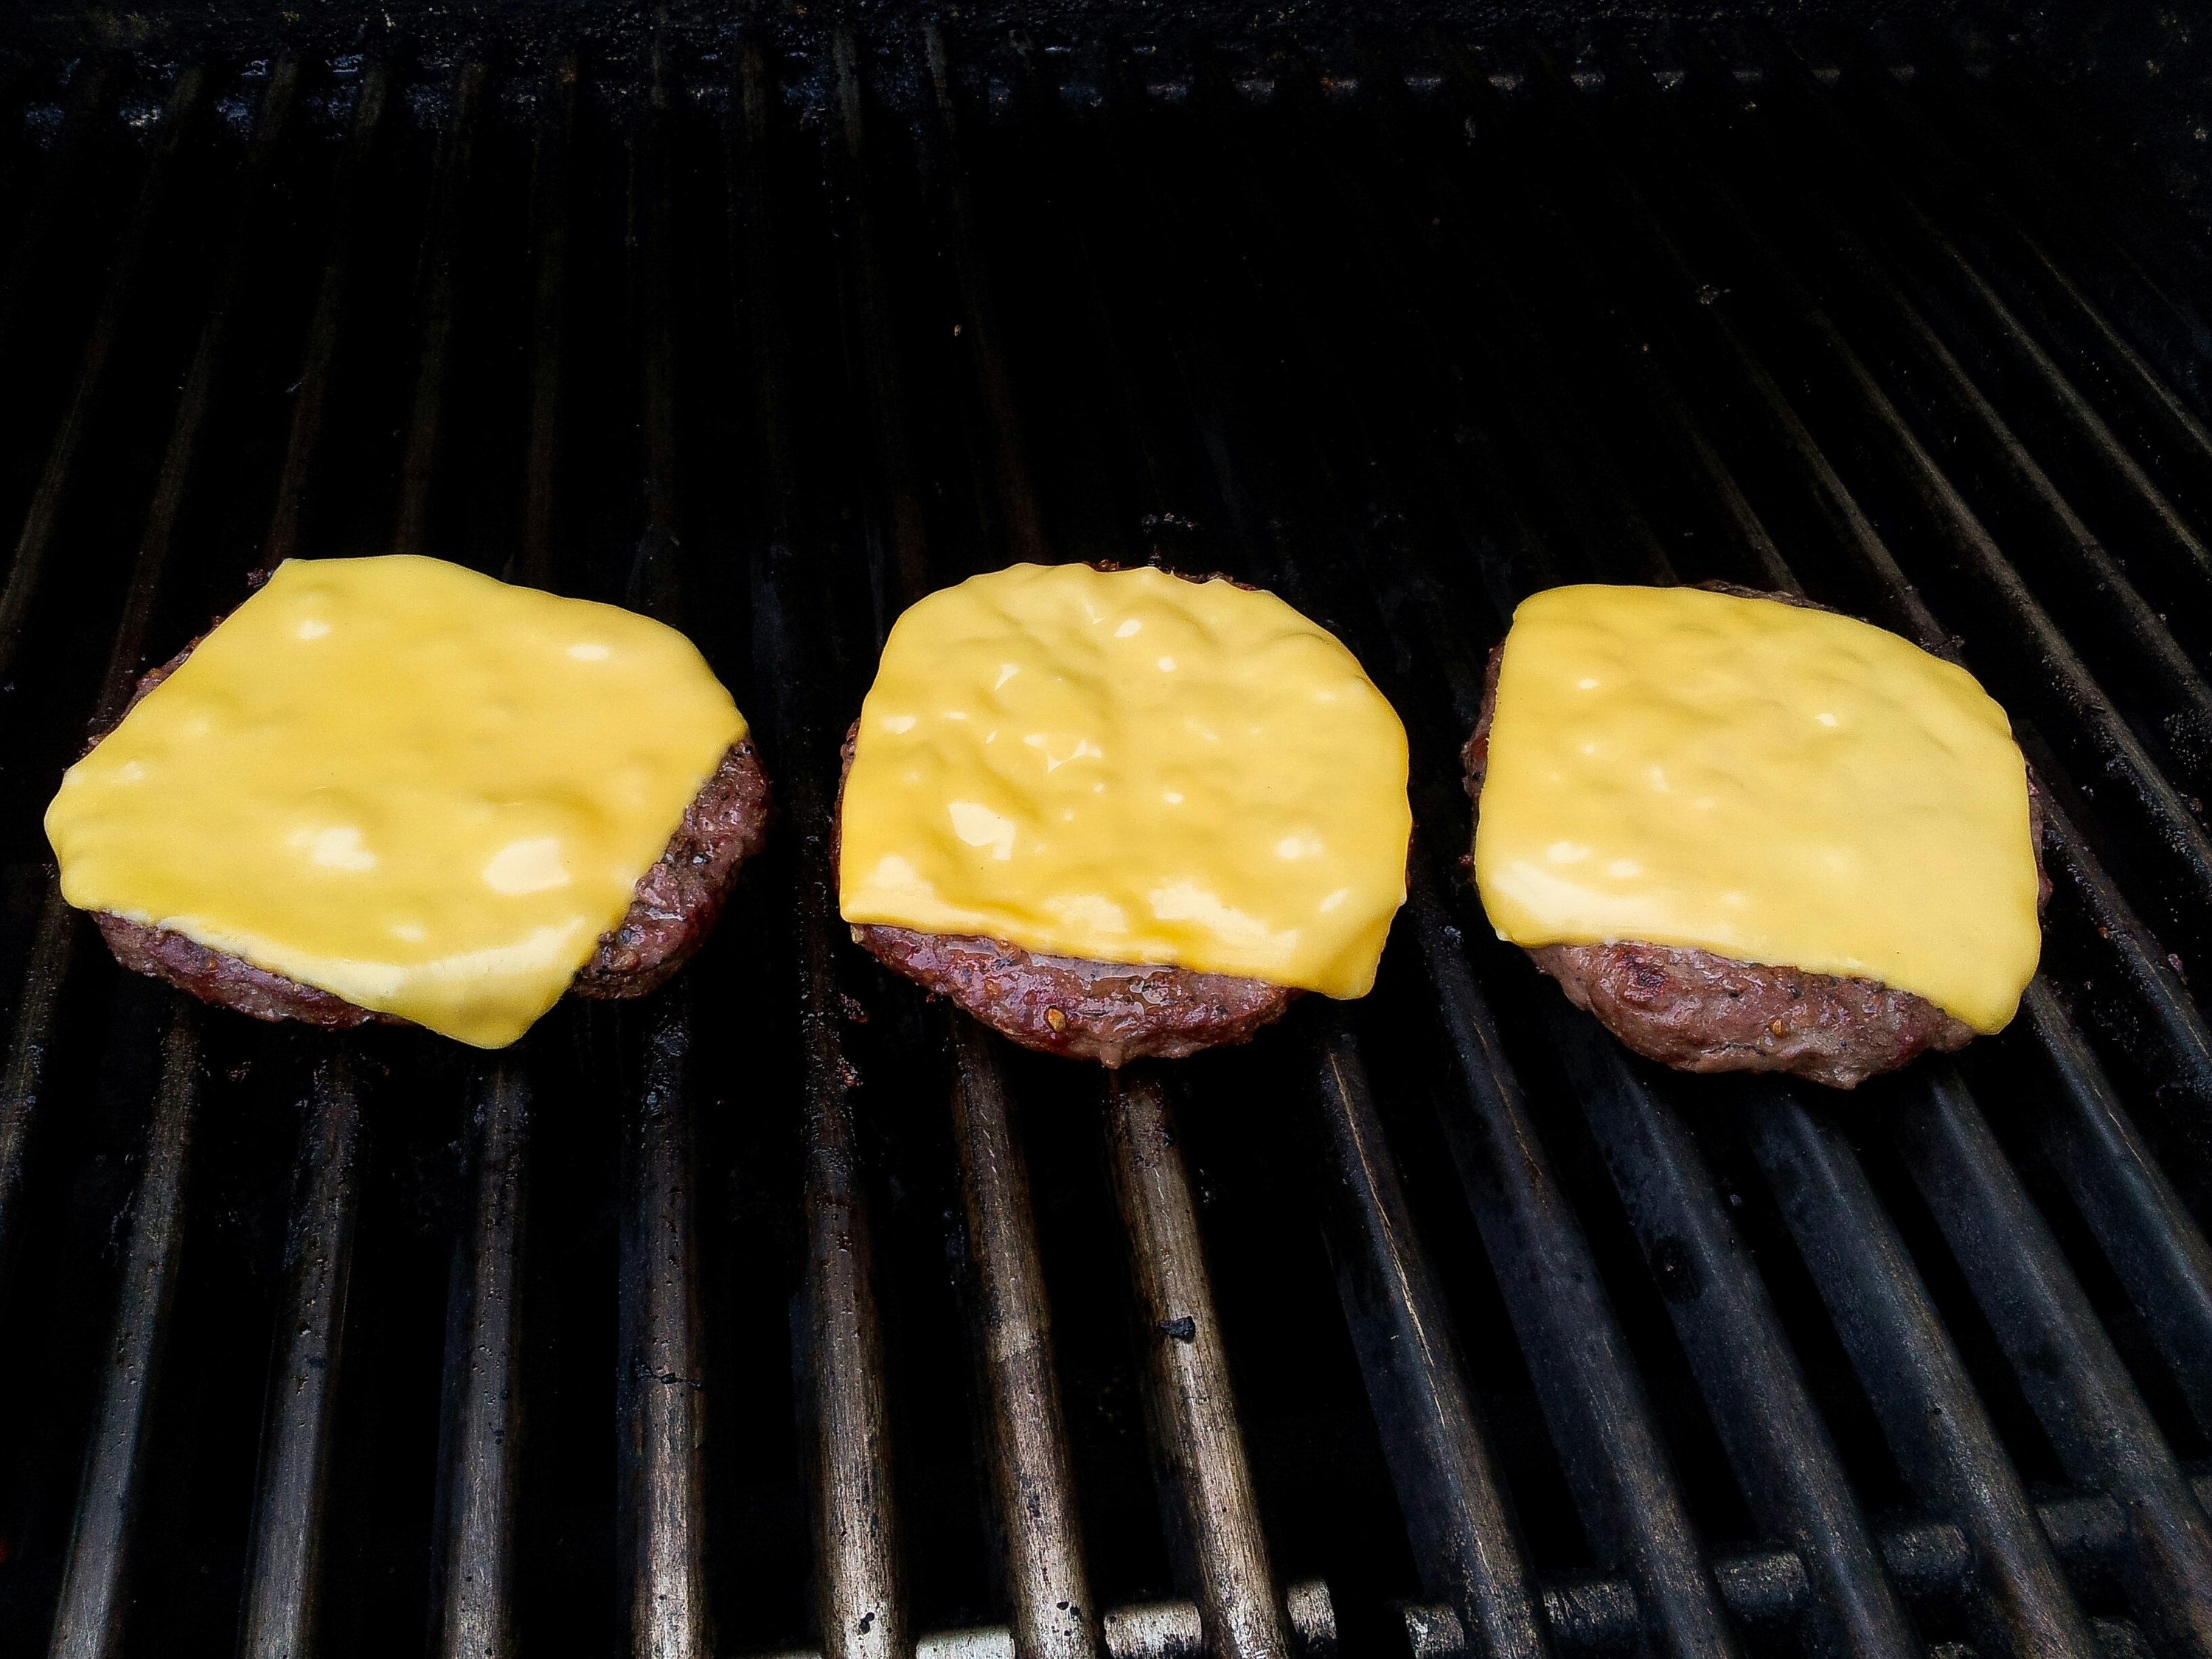 Three cheeseburger patties on a grill